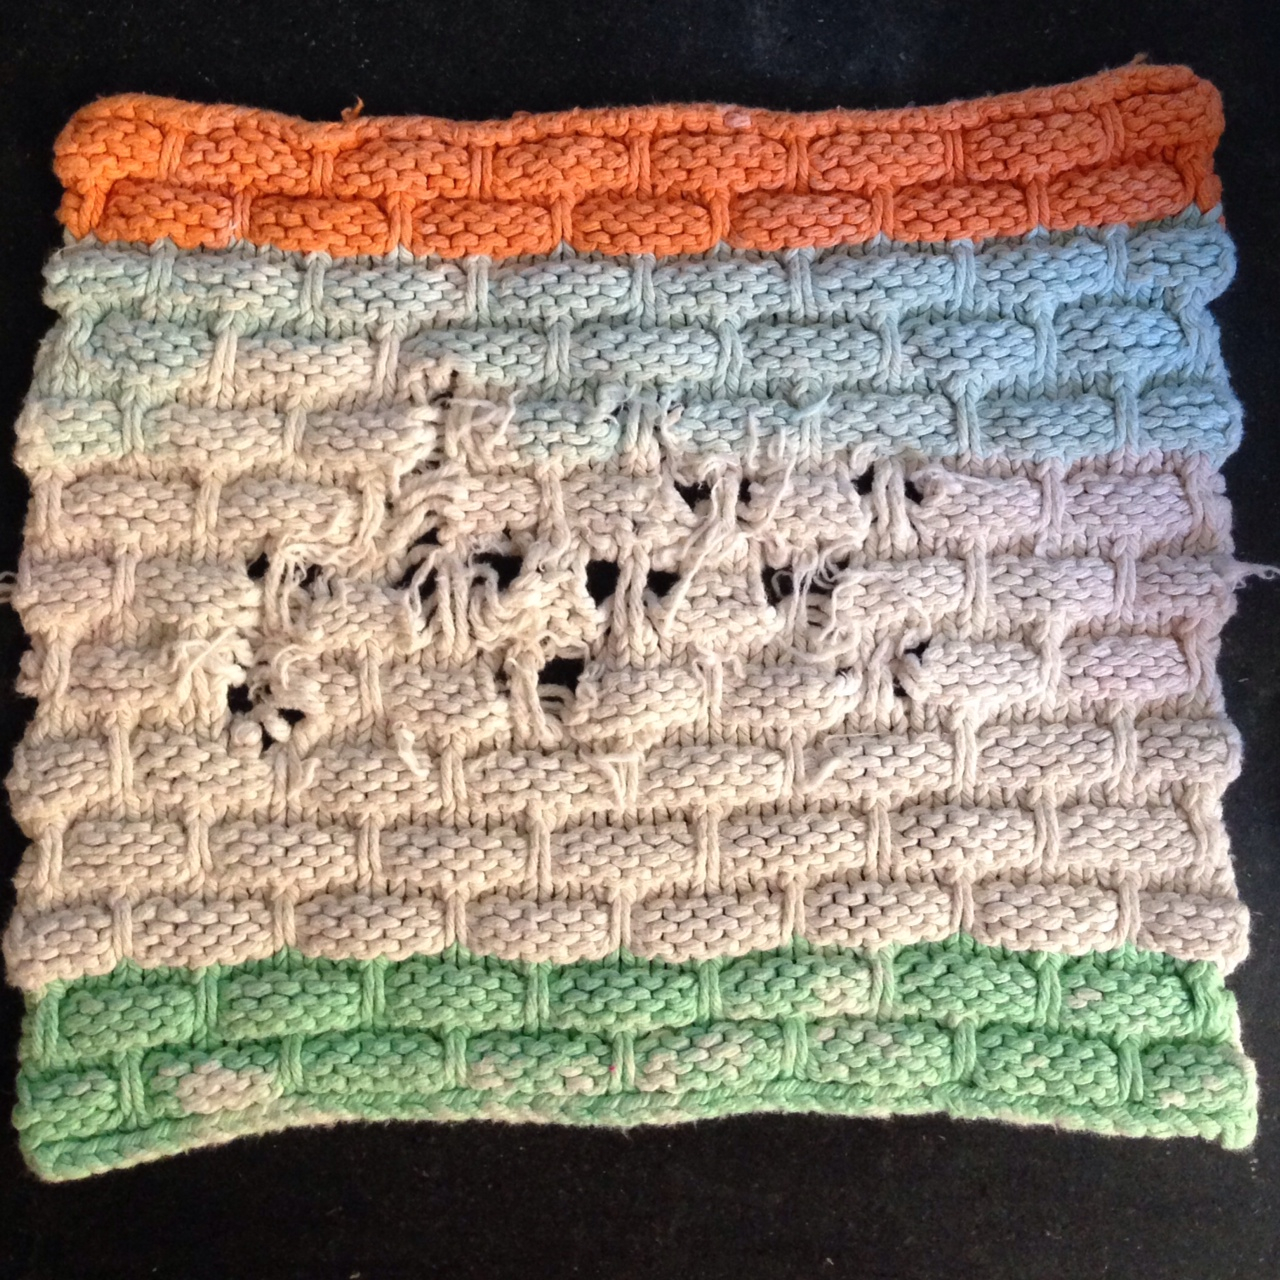 Heart Shaped Dishcloth Knitting Pattern The Cobblers Dishrag Drawer Mason Dixon Knitting